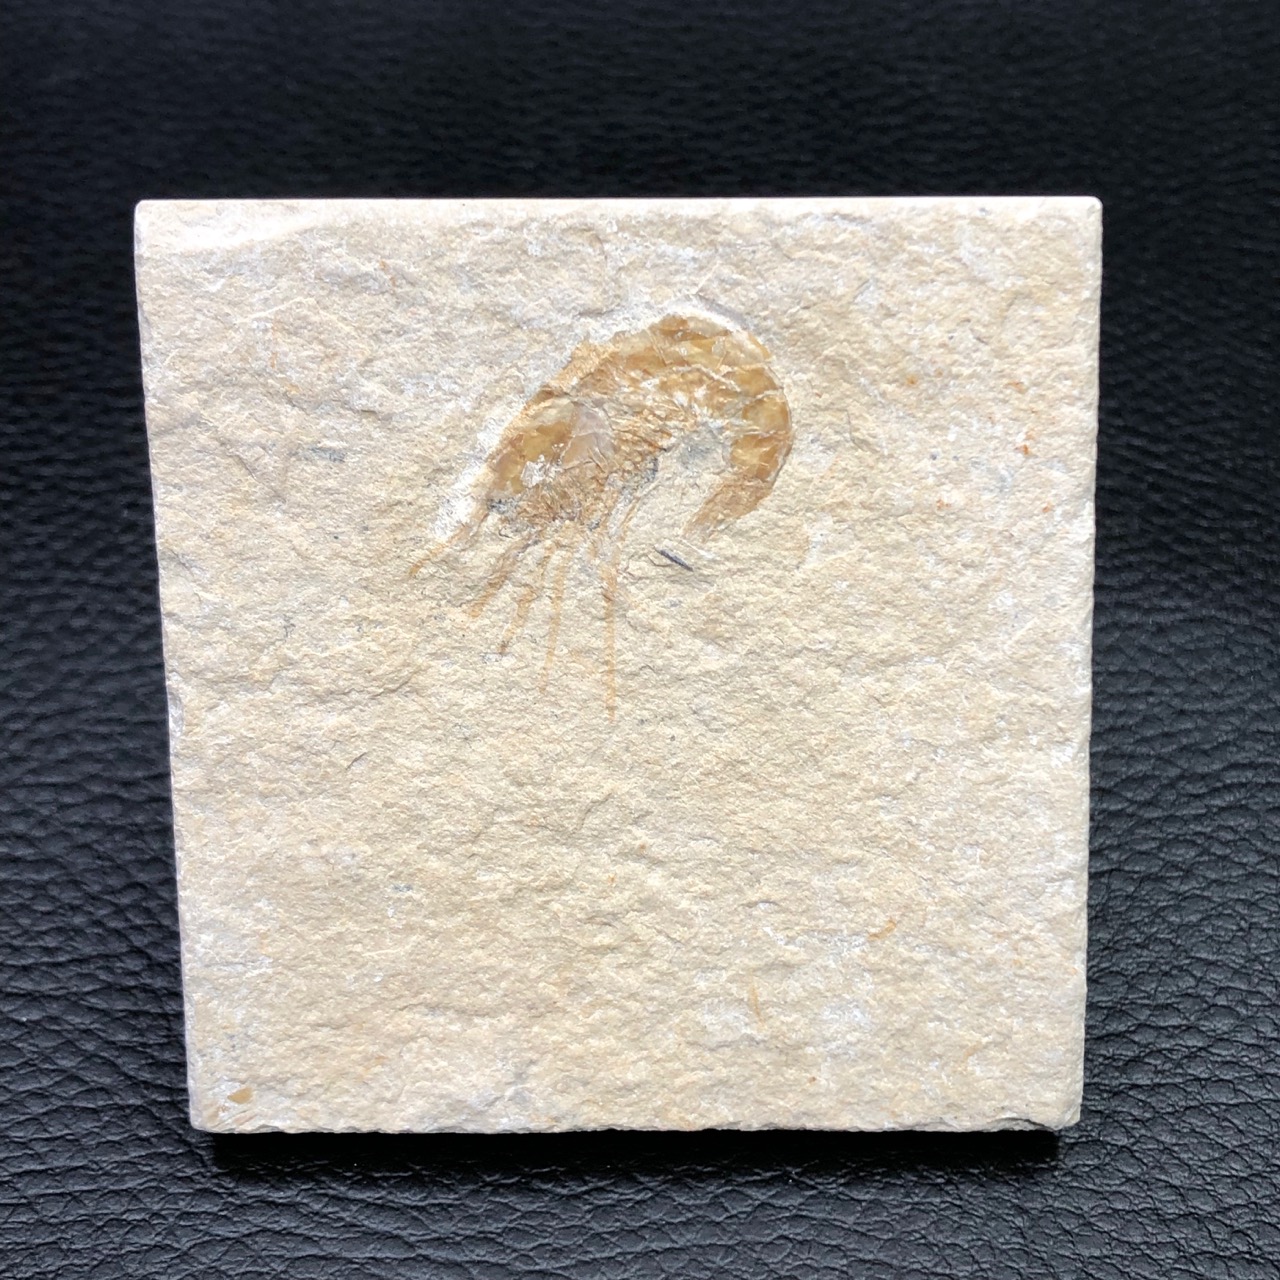 Crevette fossile Carpopenaeus callirostris d’Hajoula (réf cf4)